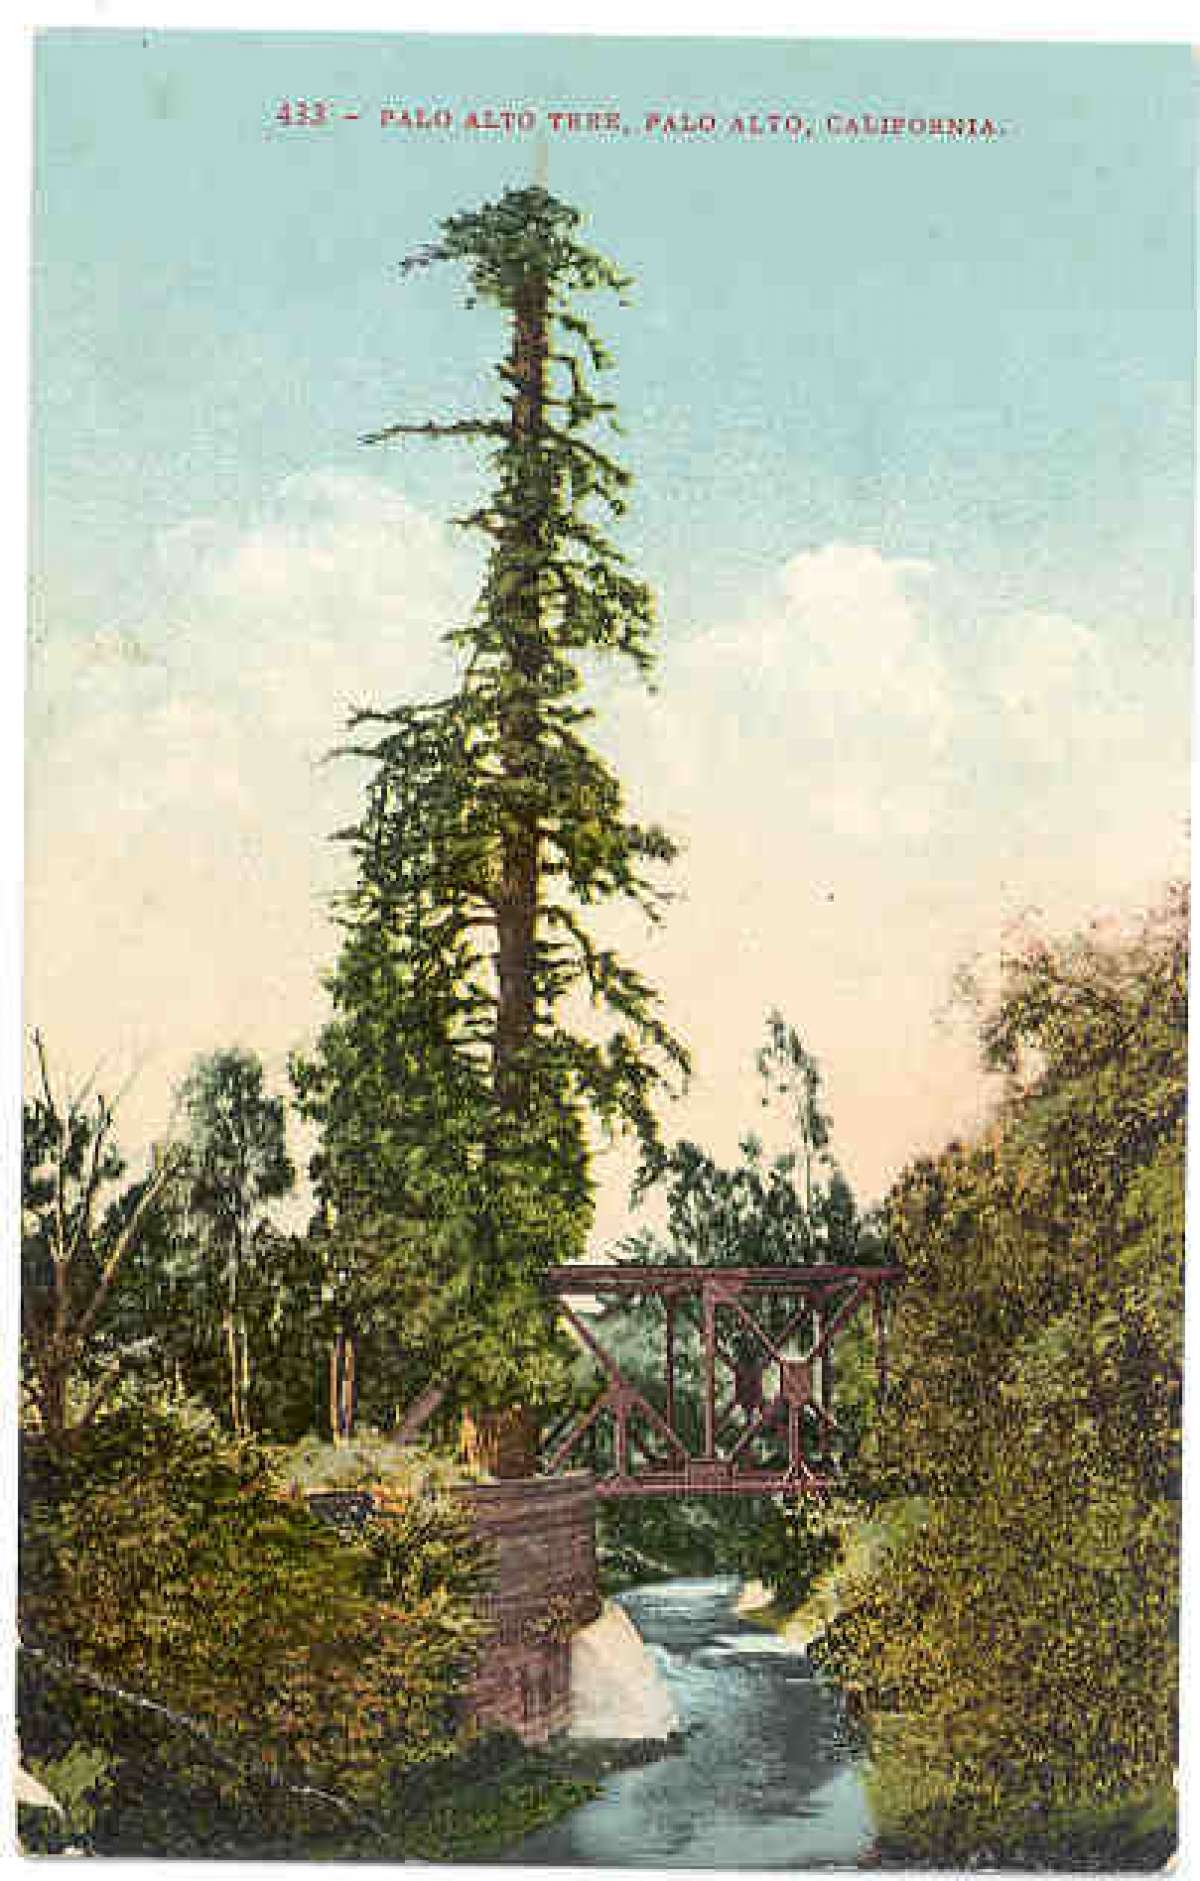 El Palo Alto, the namesake tree of Palo Alto, Calif.